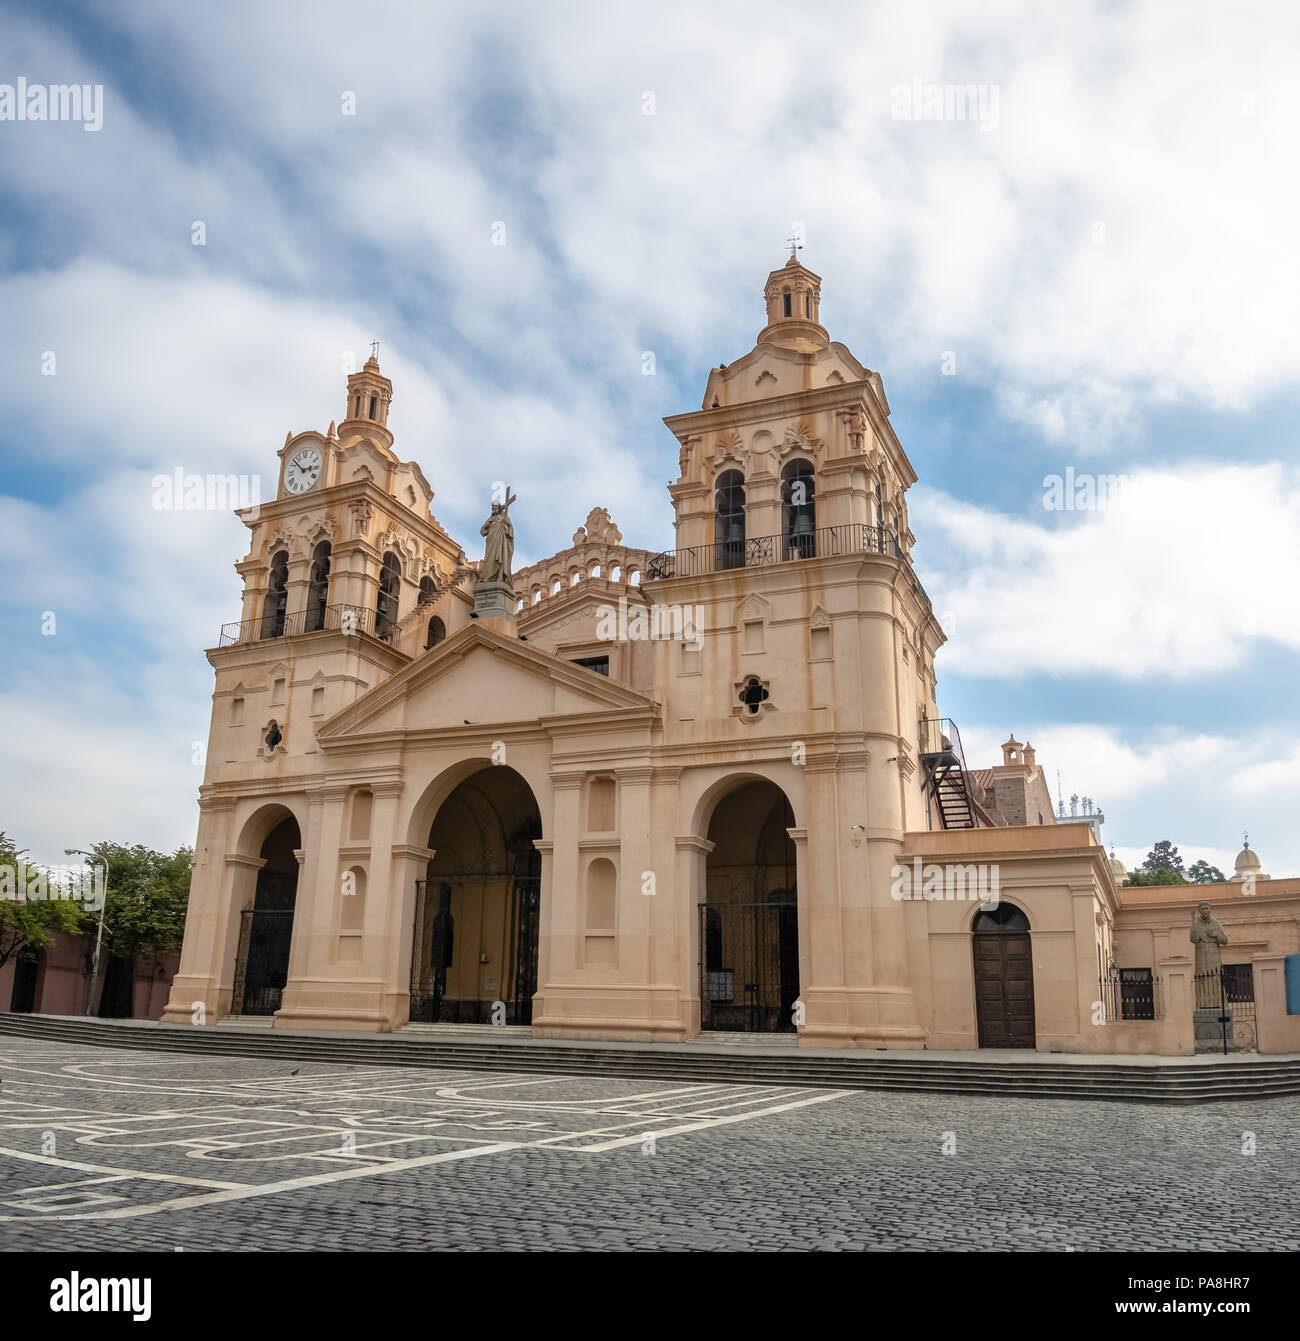 Cordoba Cathedral - Cordoba, Argentina Stock Photo